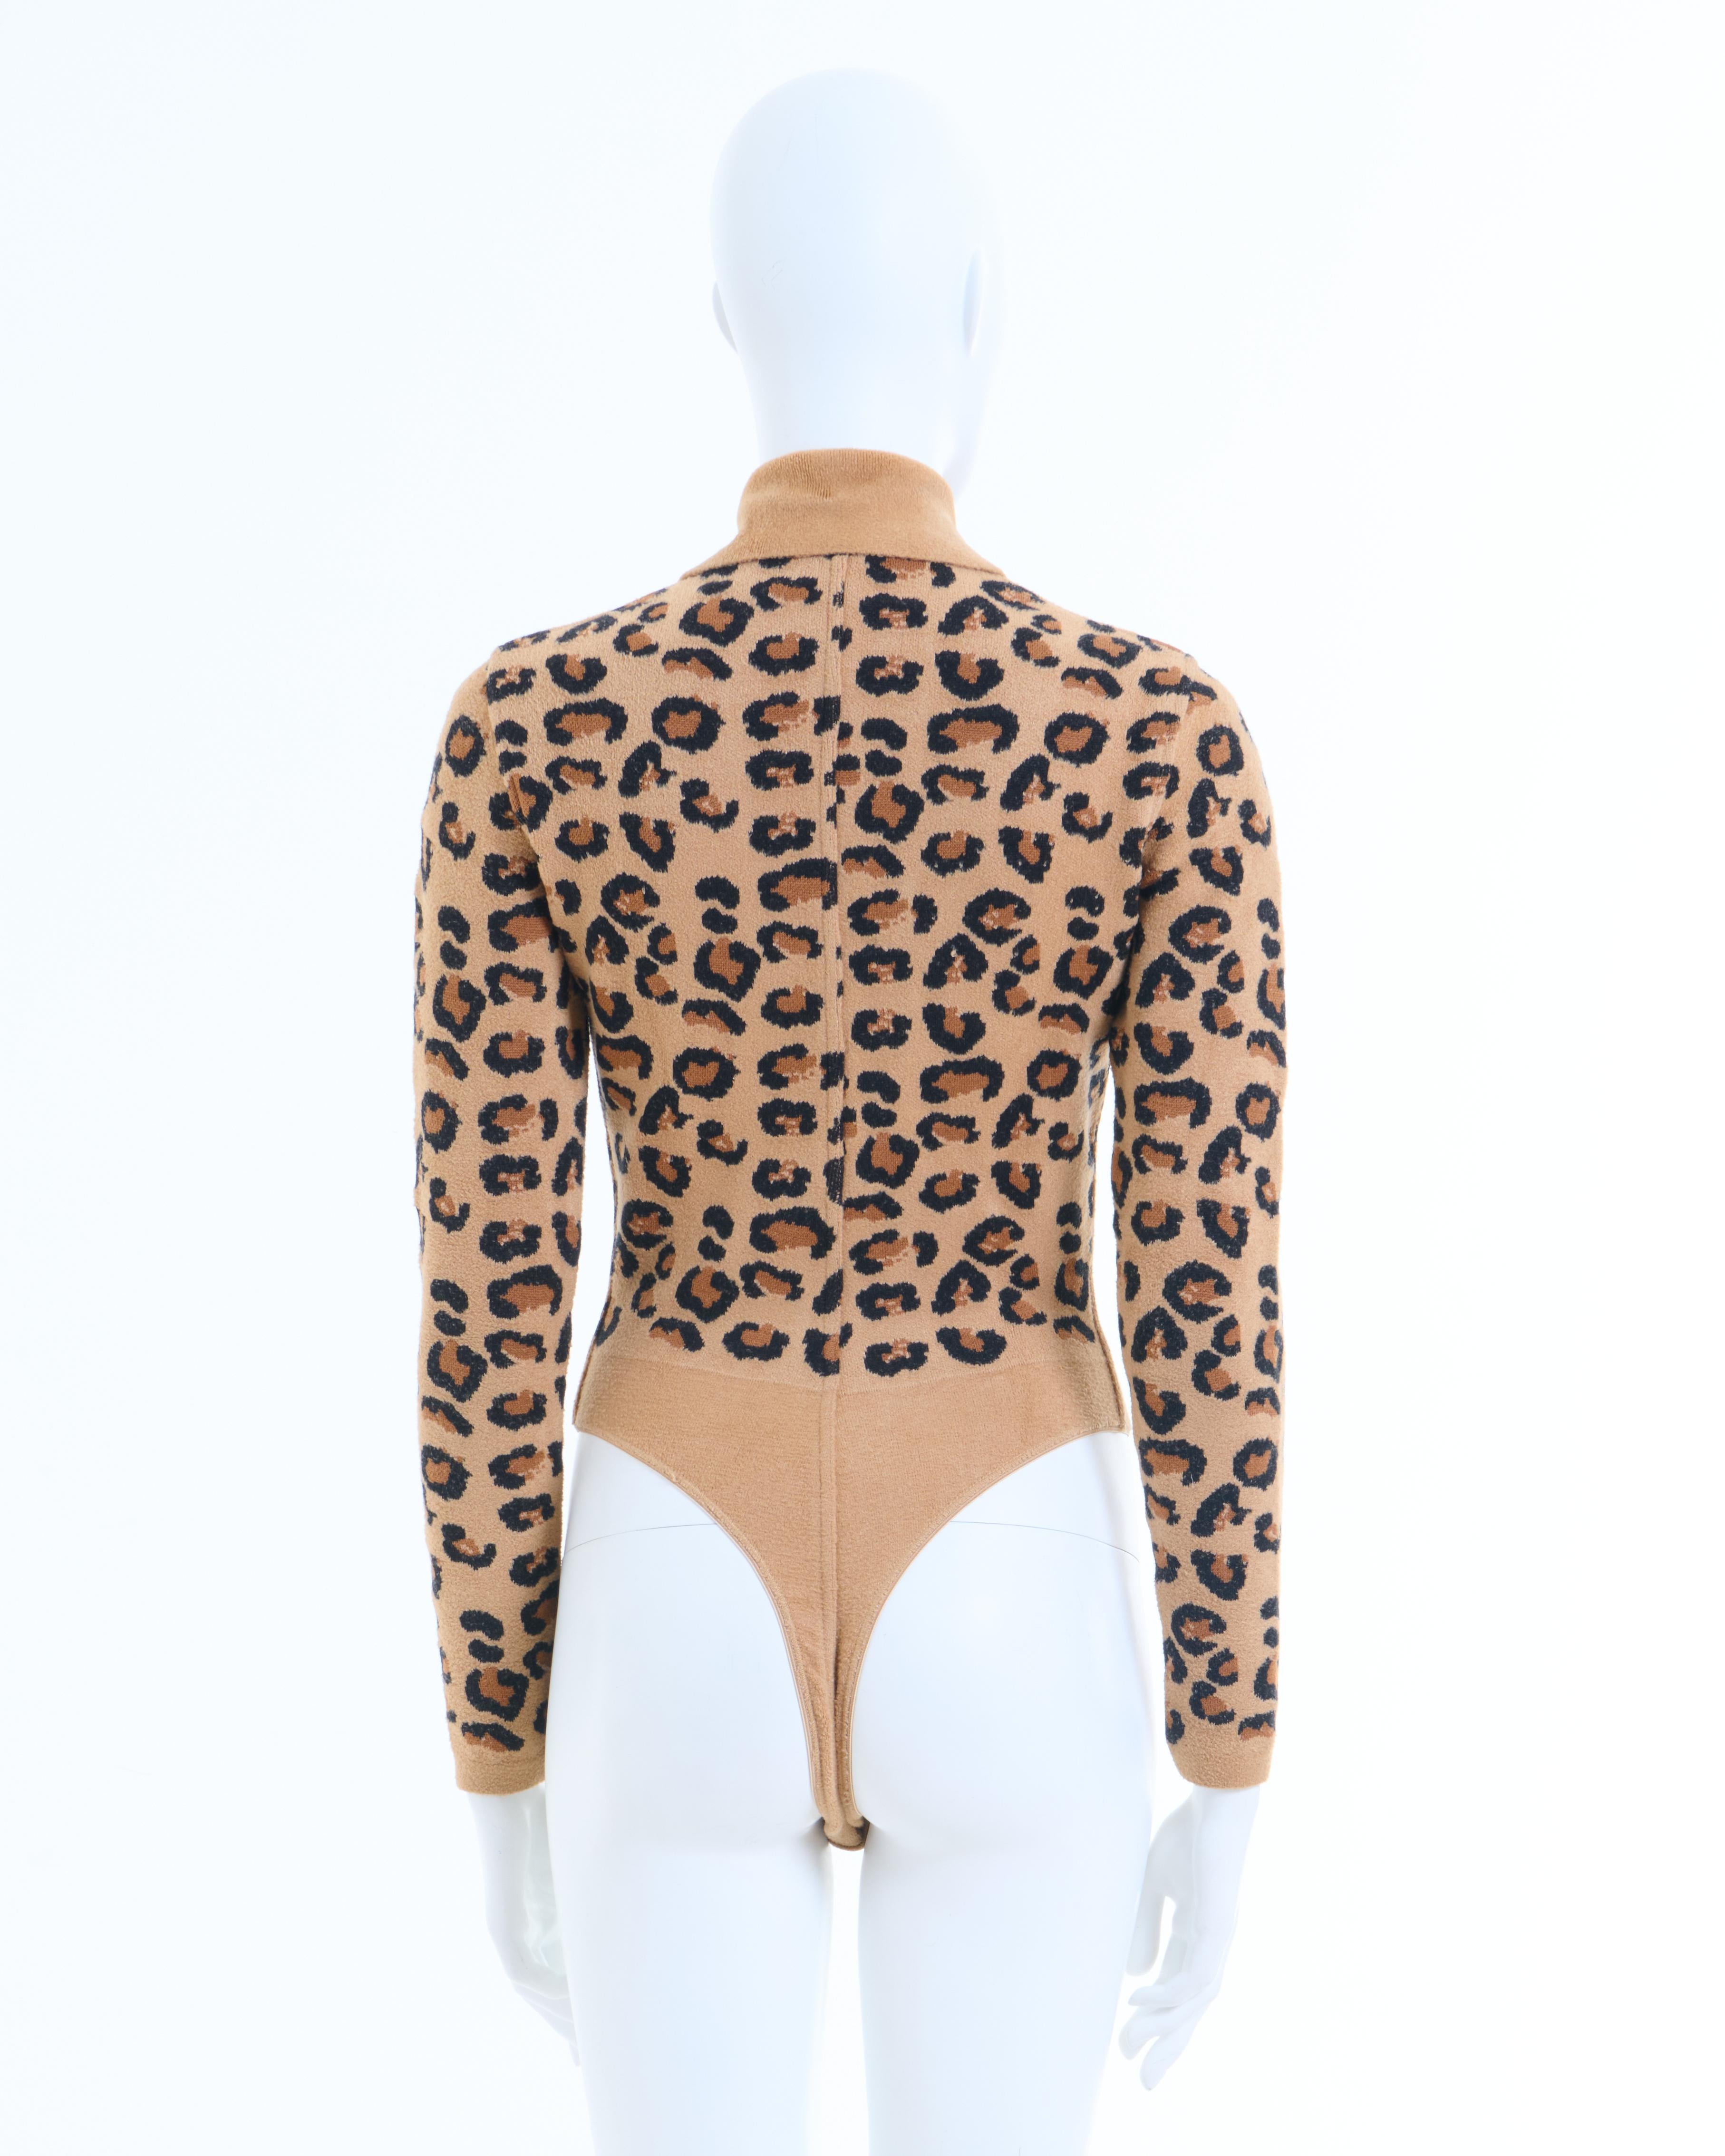 Azzedine Alaïa F/W 1991 Leopard wool knitted body and leggings set  For Sale 7